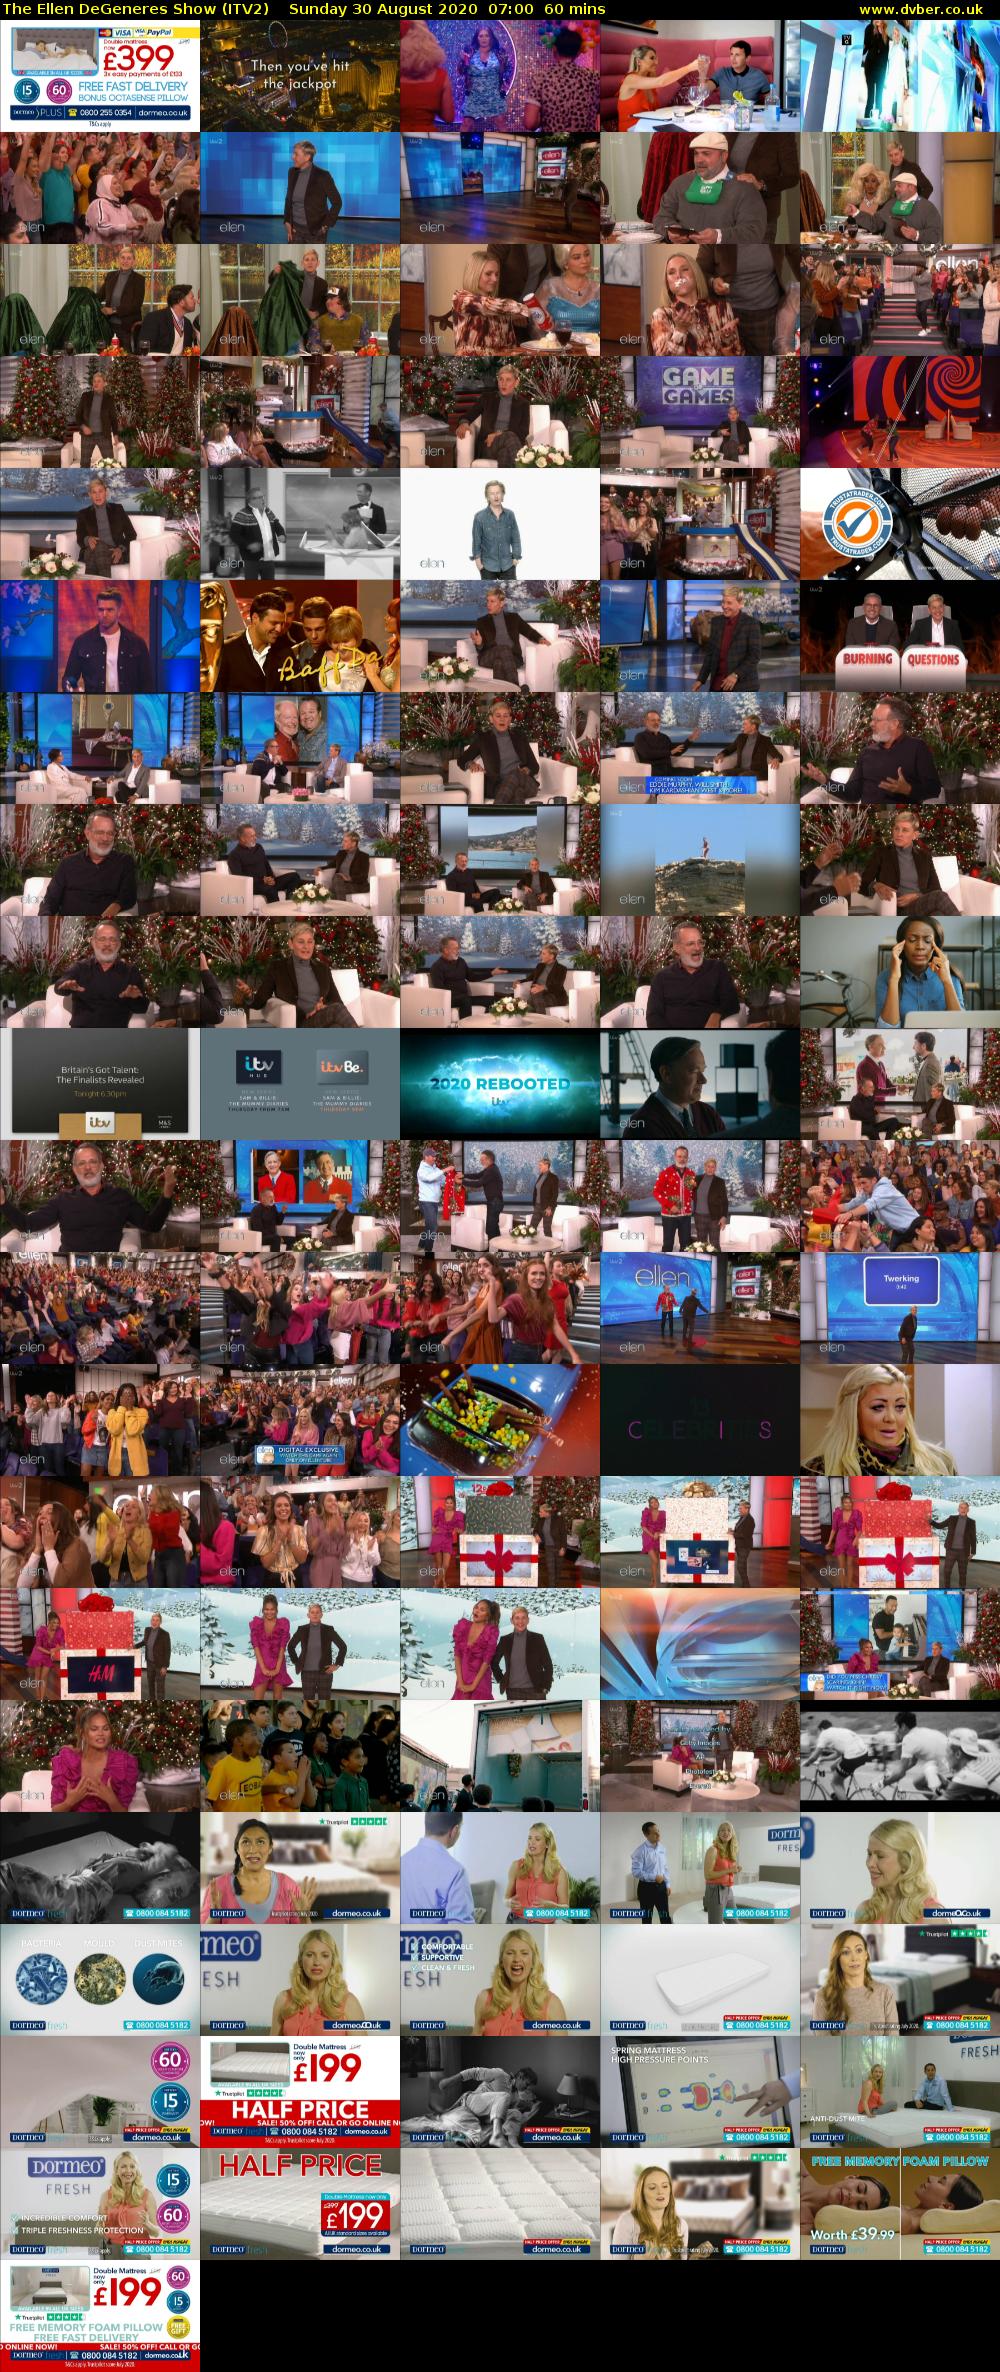 The Ellen DeGeneres Show (ITV2) Sunday 30 August 2020 07:00 - 08:00